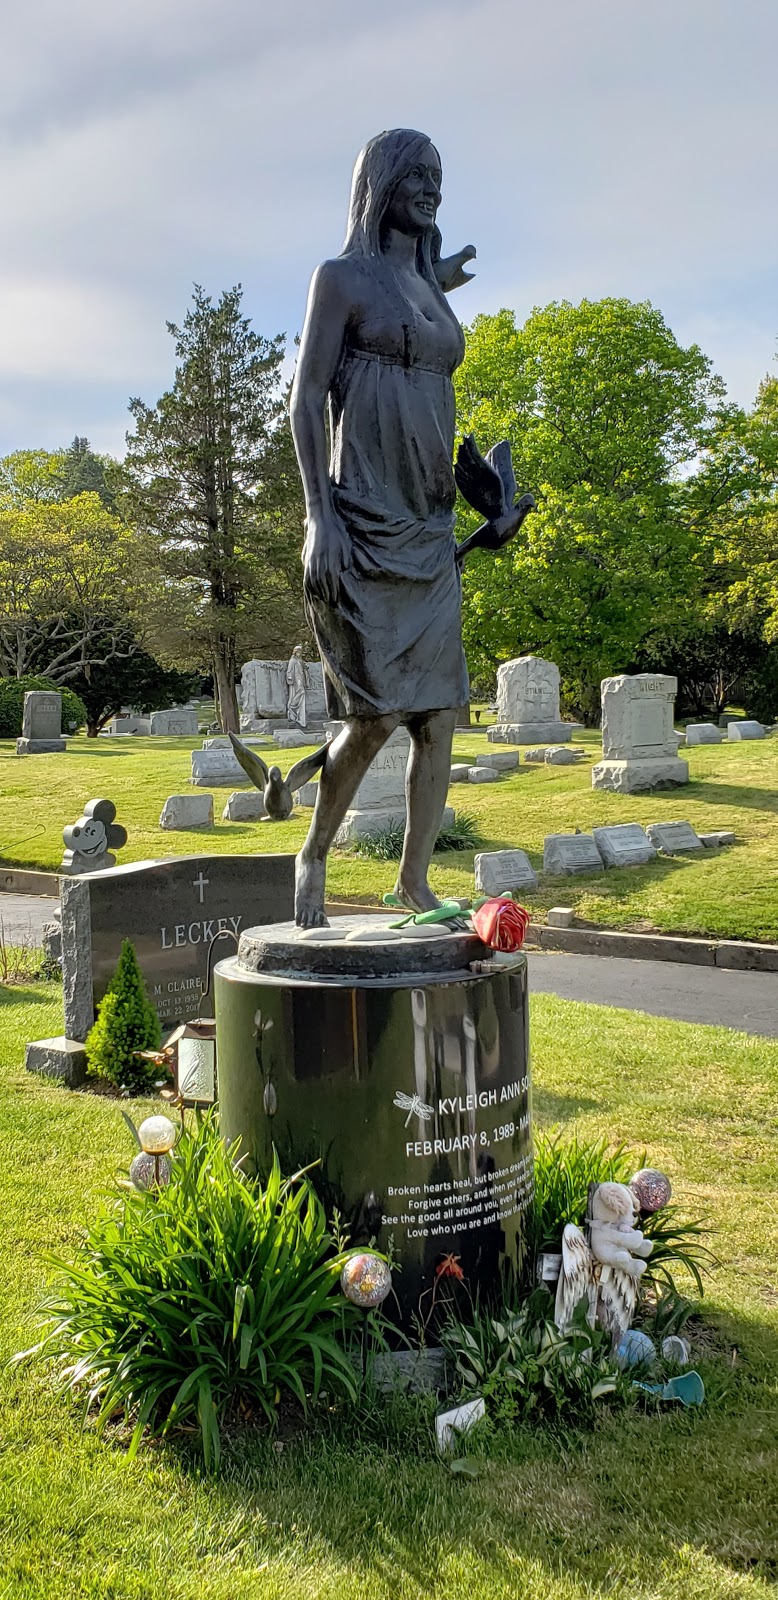 Greenwood Cemetery Association Inc | Schoolhouse Rd, Brielle, NJ 08730, USA | Phone: (732) 223-4465